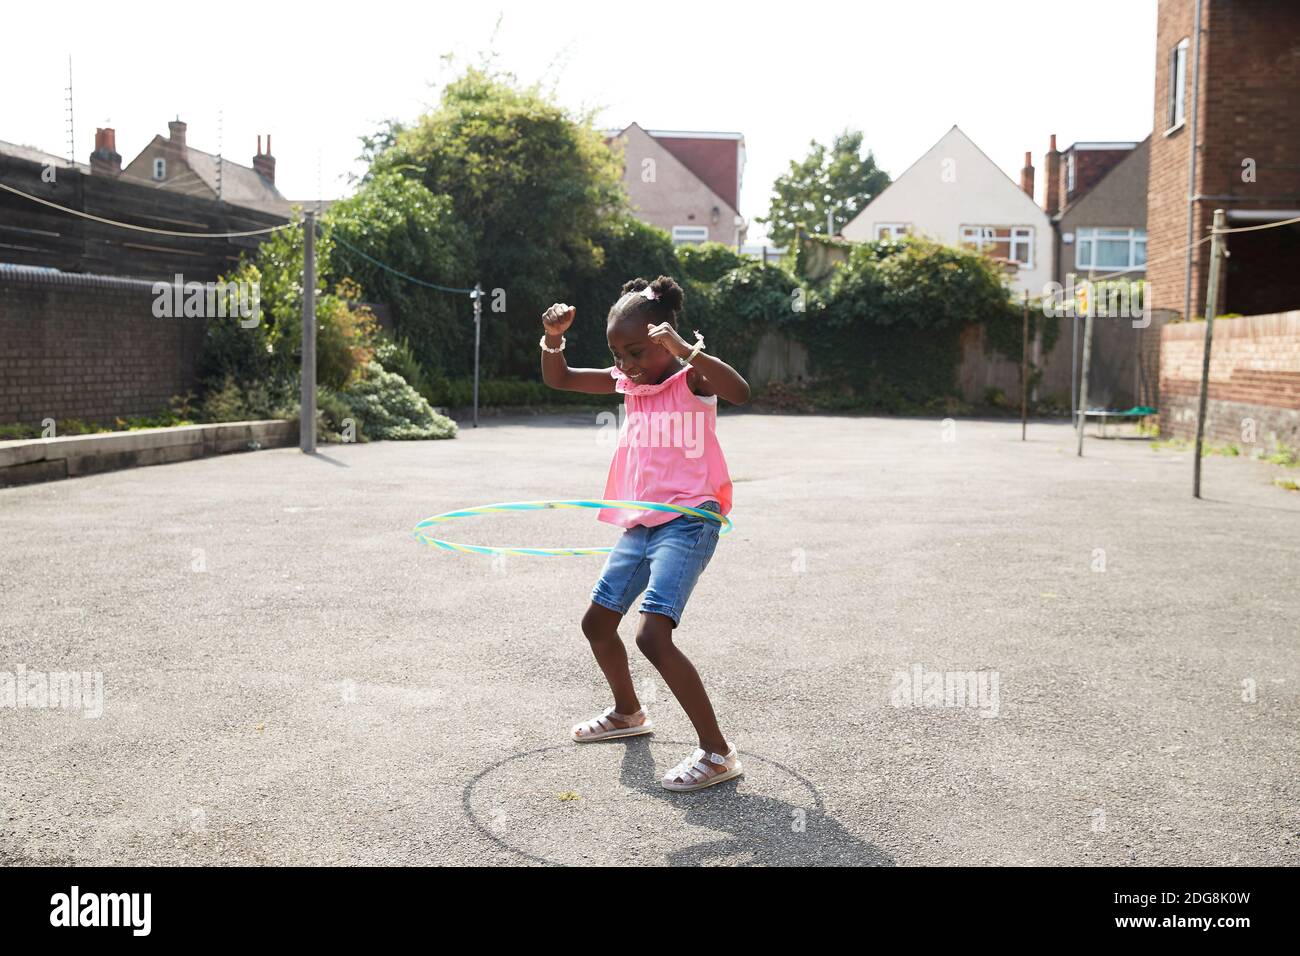 Playful happy girl spinning in plastic hoop in sunny neighborhood Stock Photo